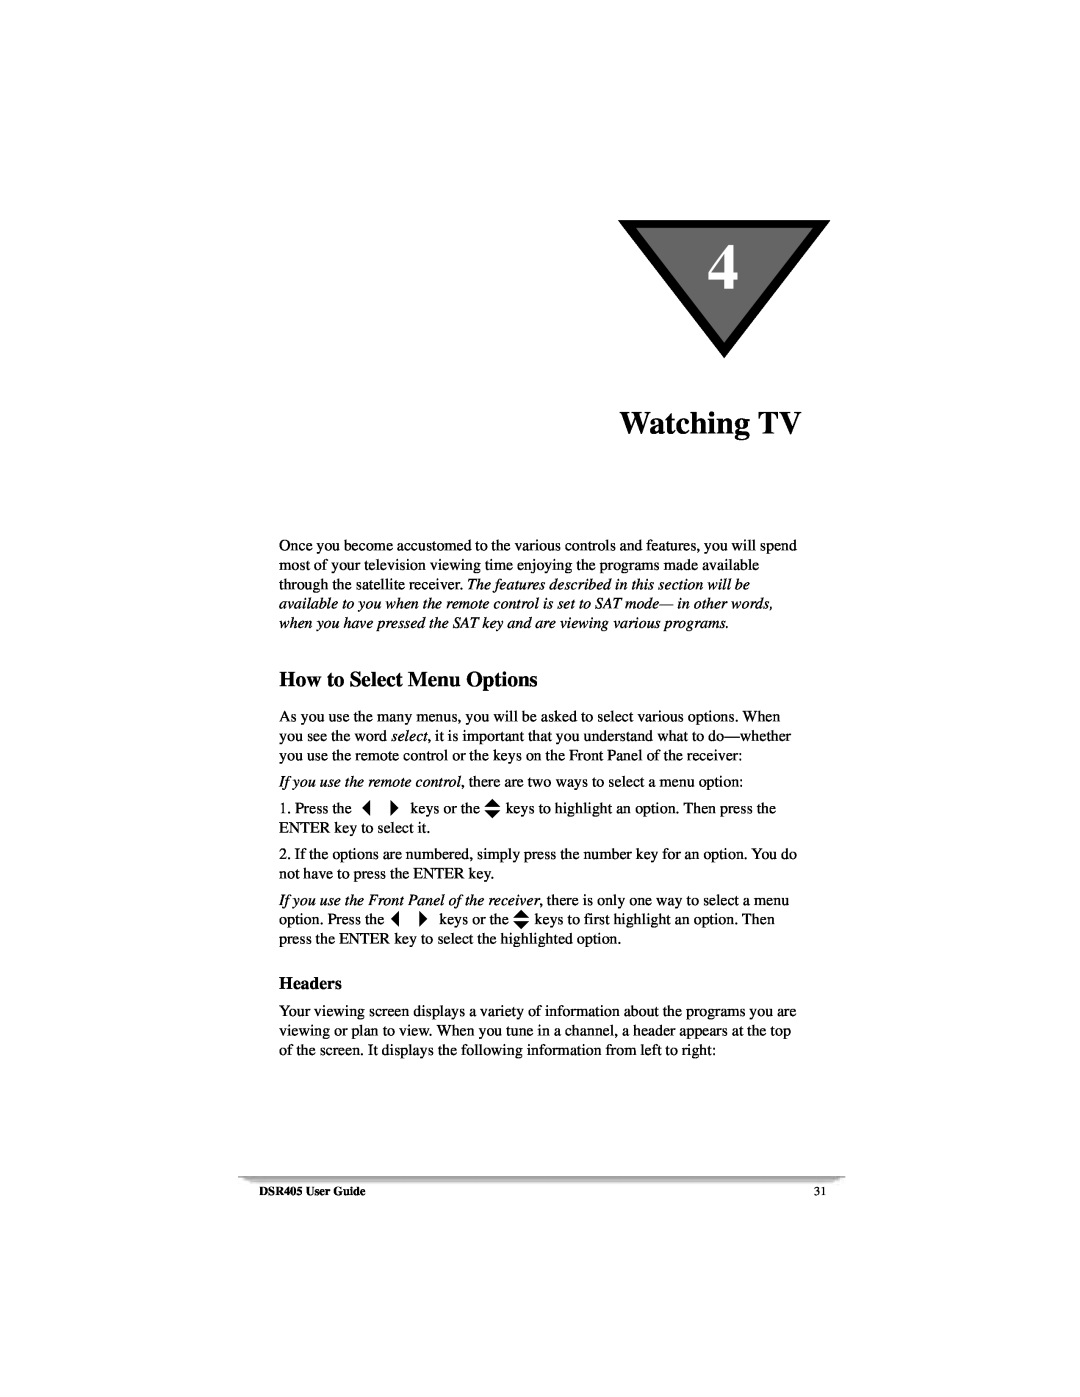 Motorola DSR405 manual Watching TV, How to Select Menu Options, Headers 